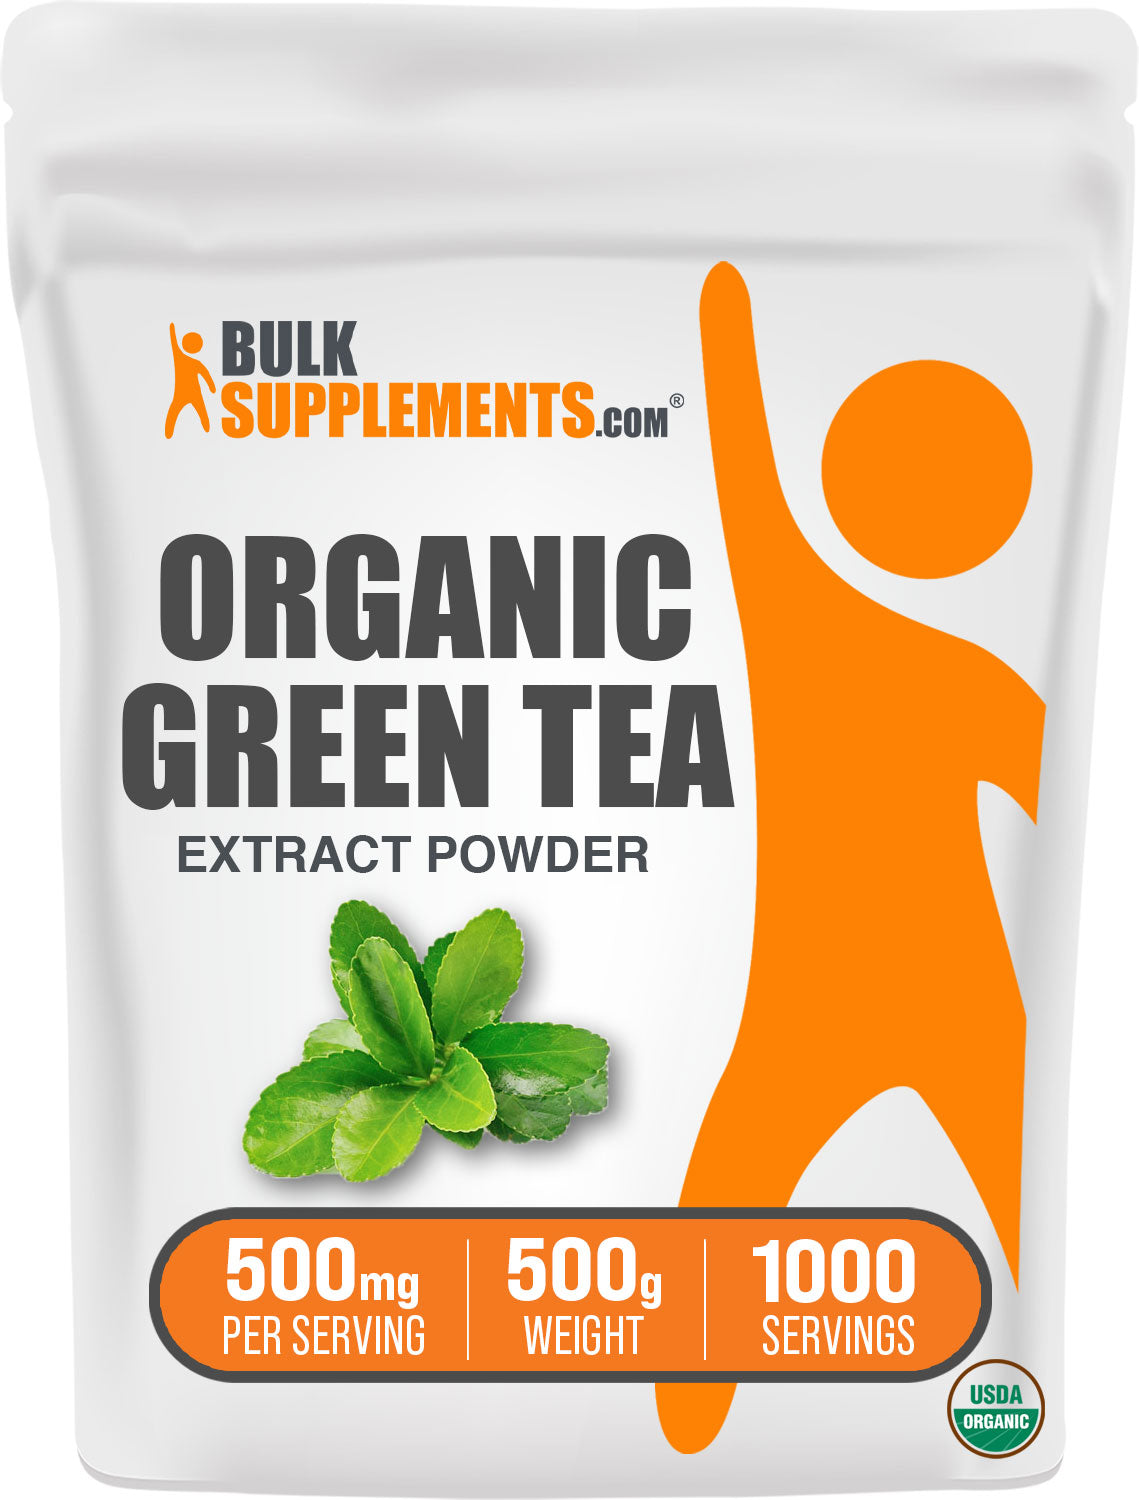 BulkSupplements.com Organic green tea extract powder 500g bag